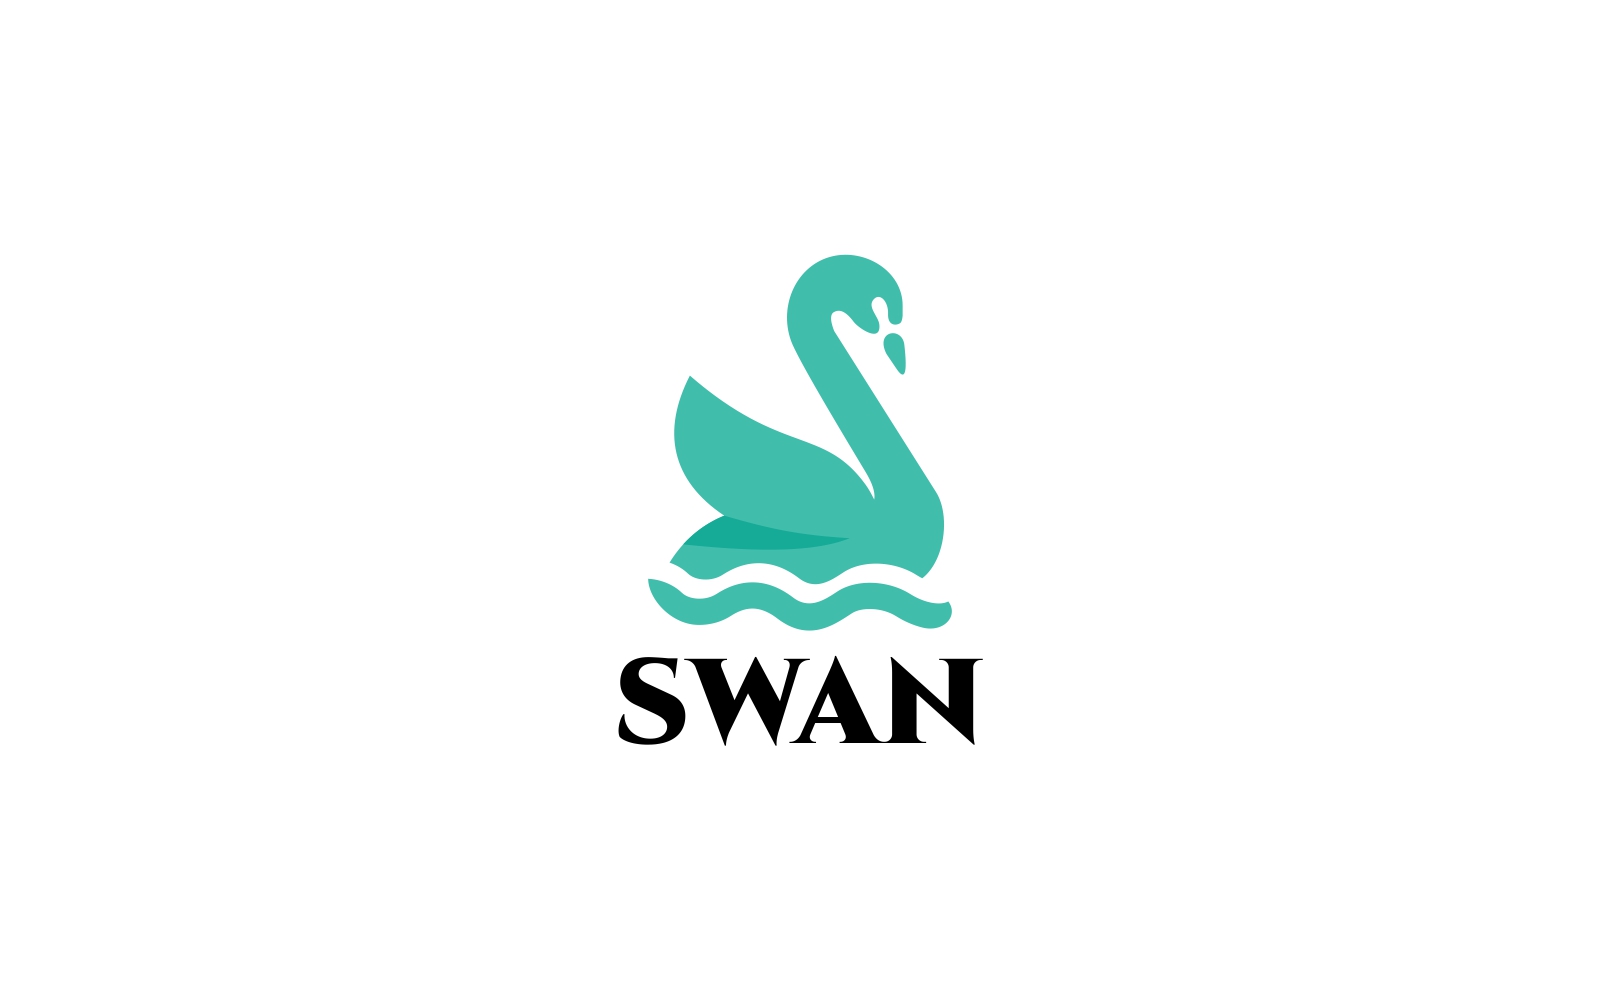 Swan Logo Template